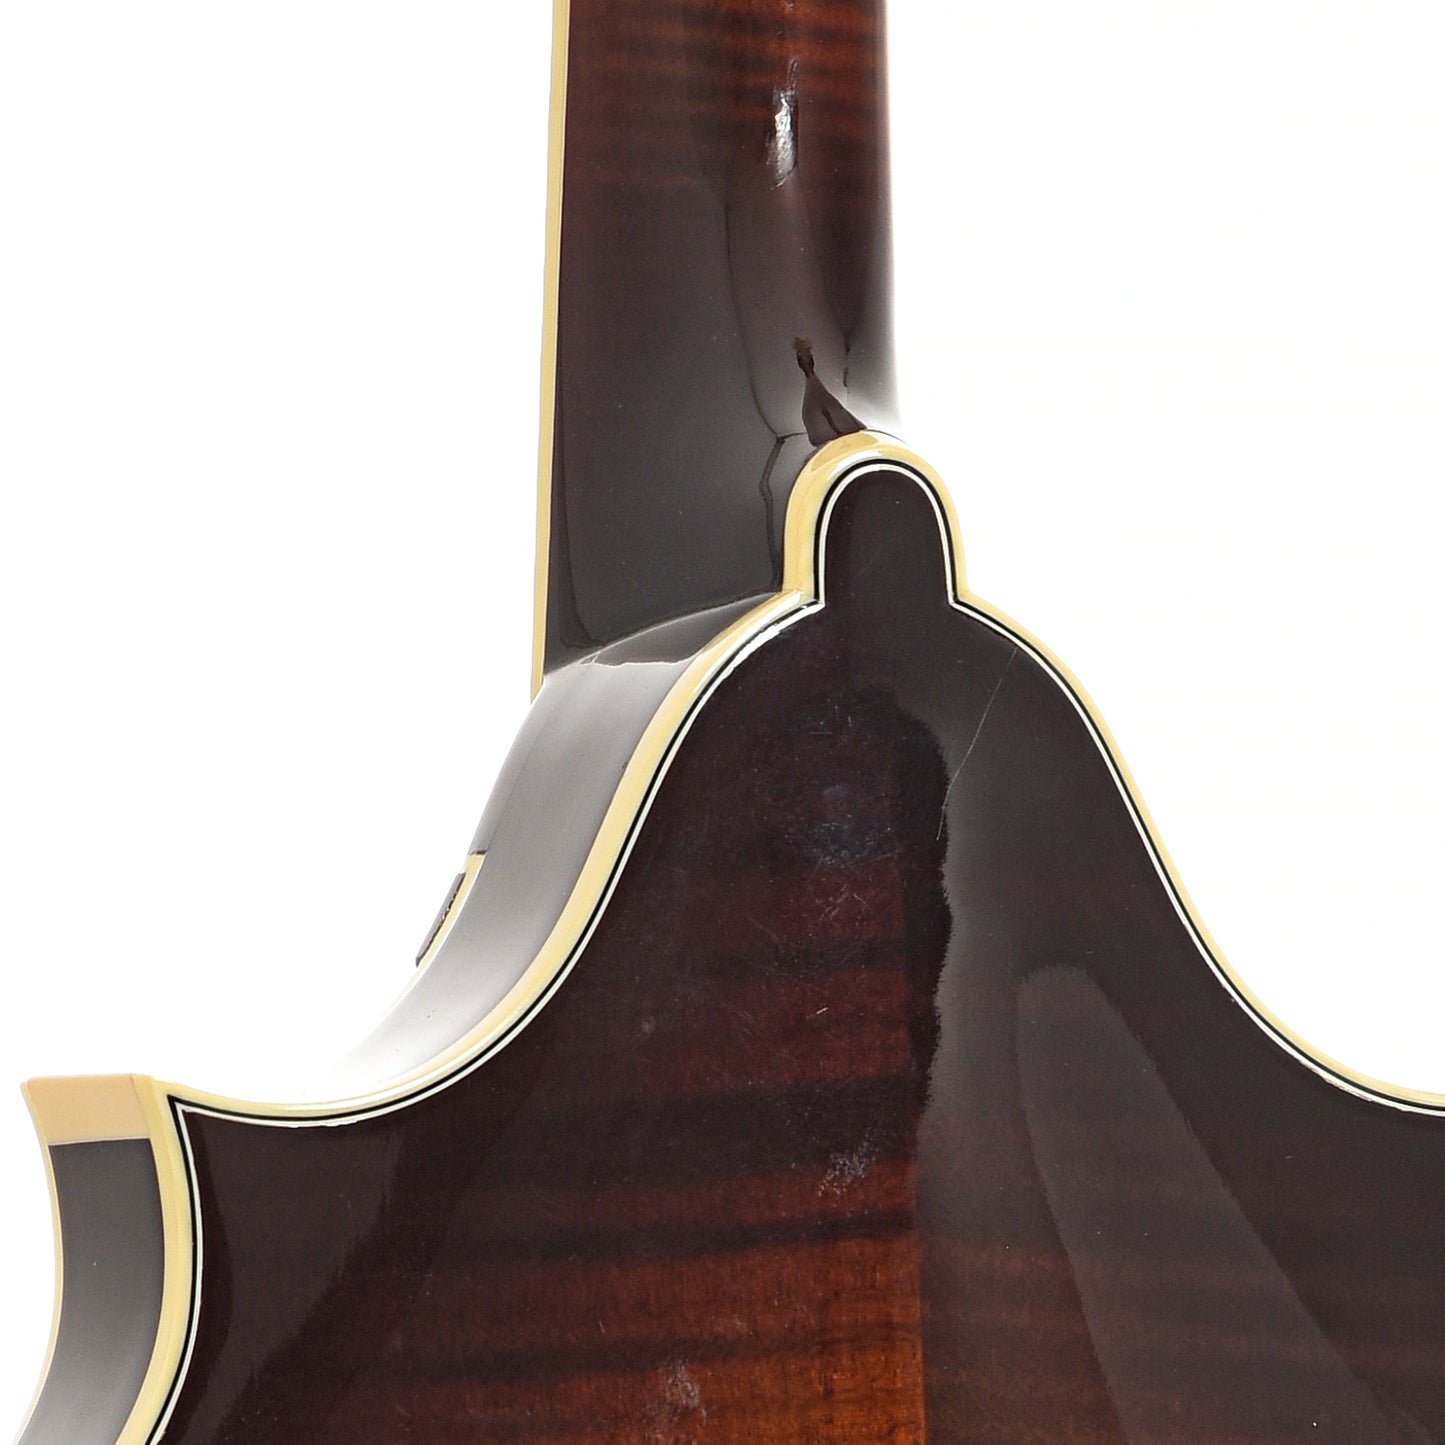 Heel of Weber Bighorn Mandolin (2006)